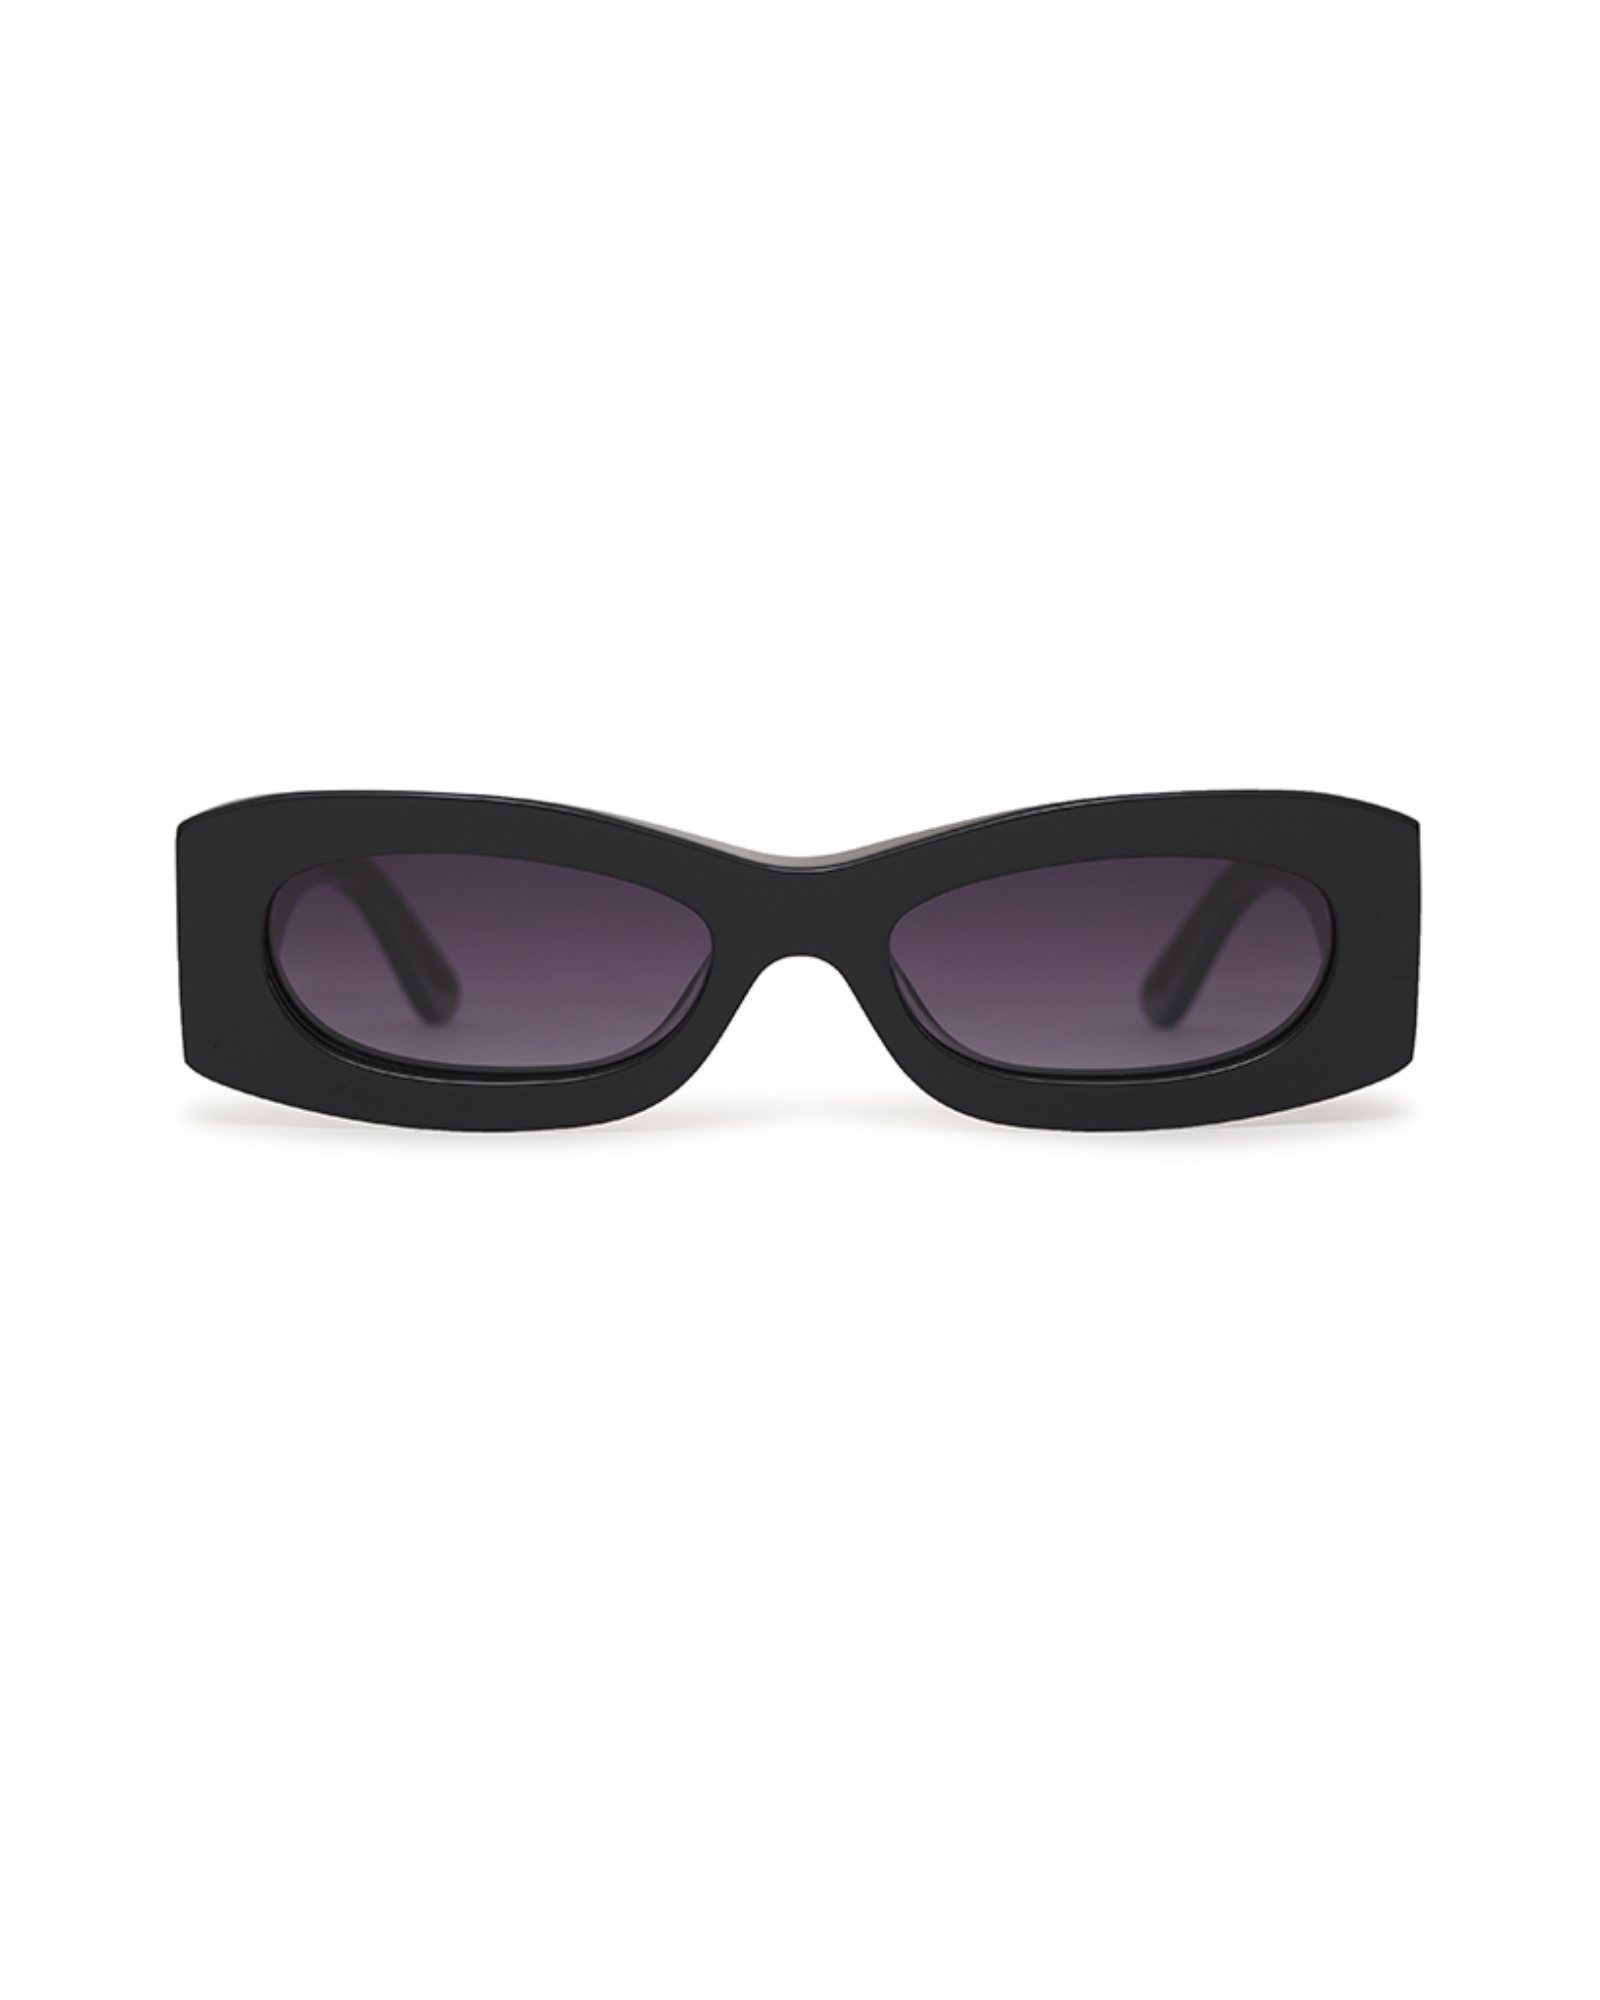 Anine Bing Malibu Sunglasses in Black